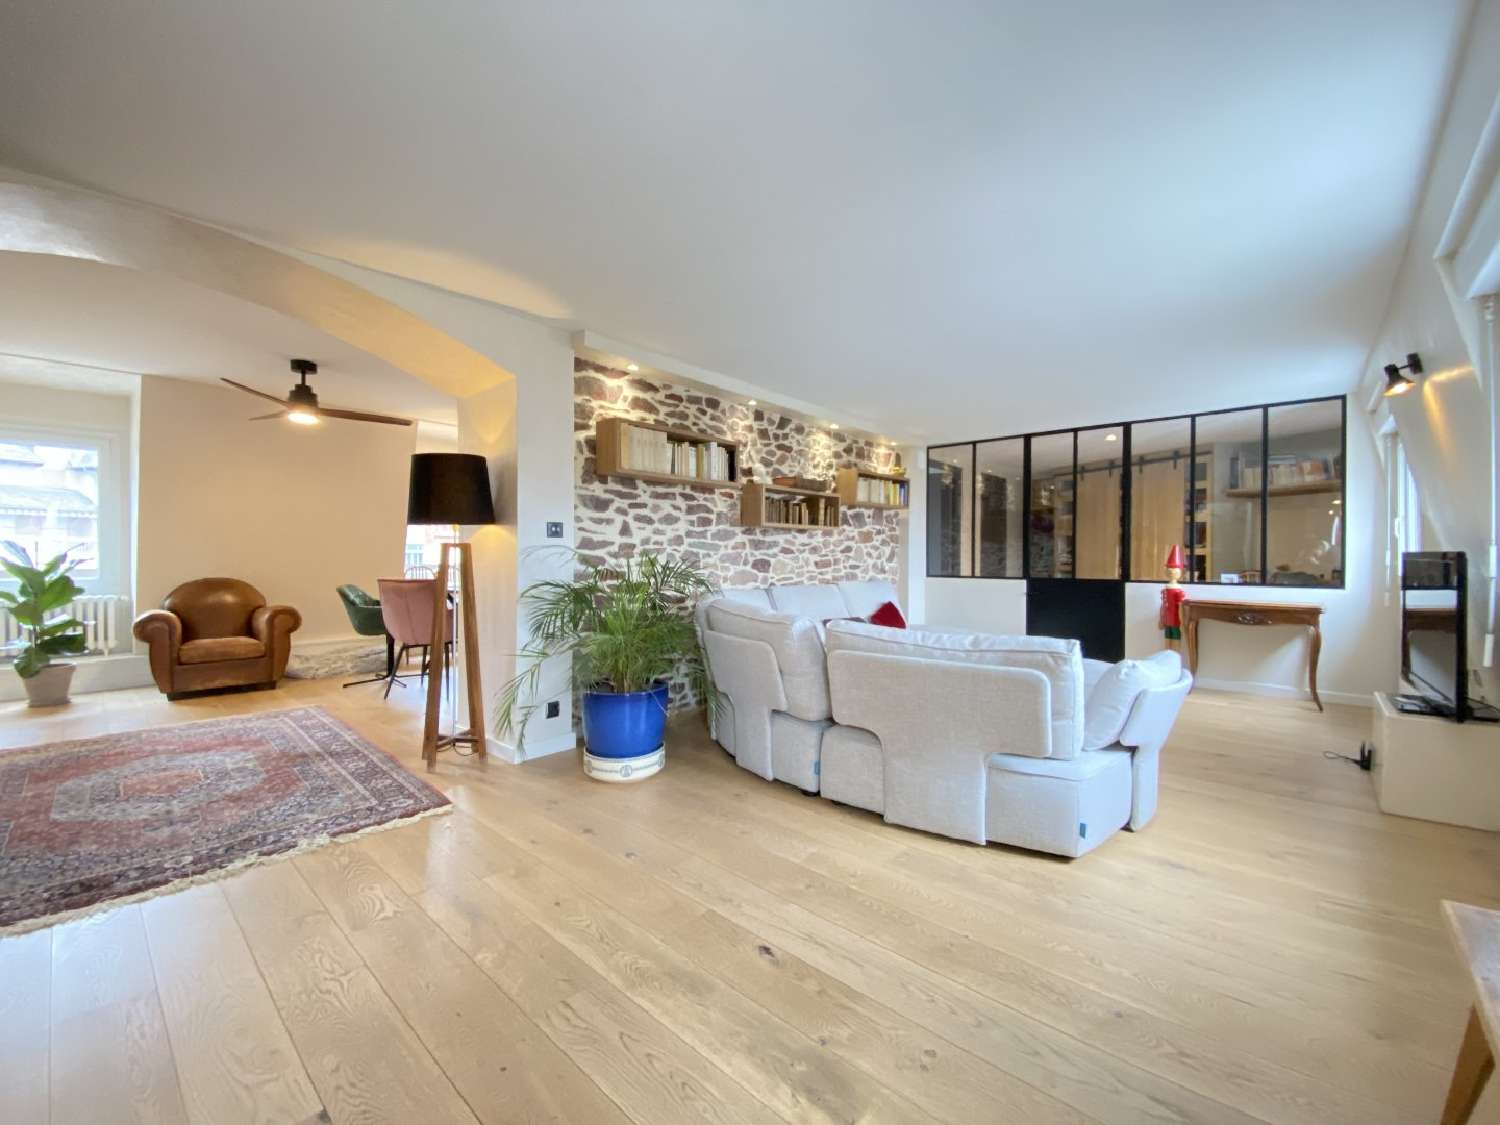  for sale apartment Rodez Aveyron 3